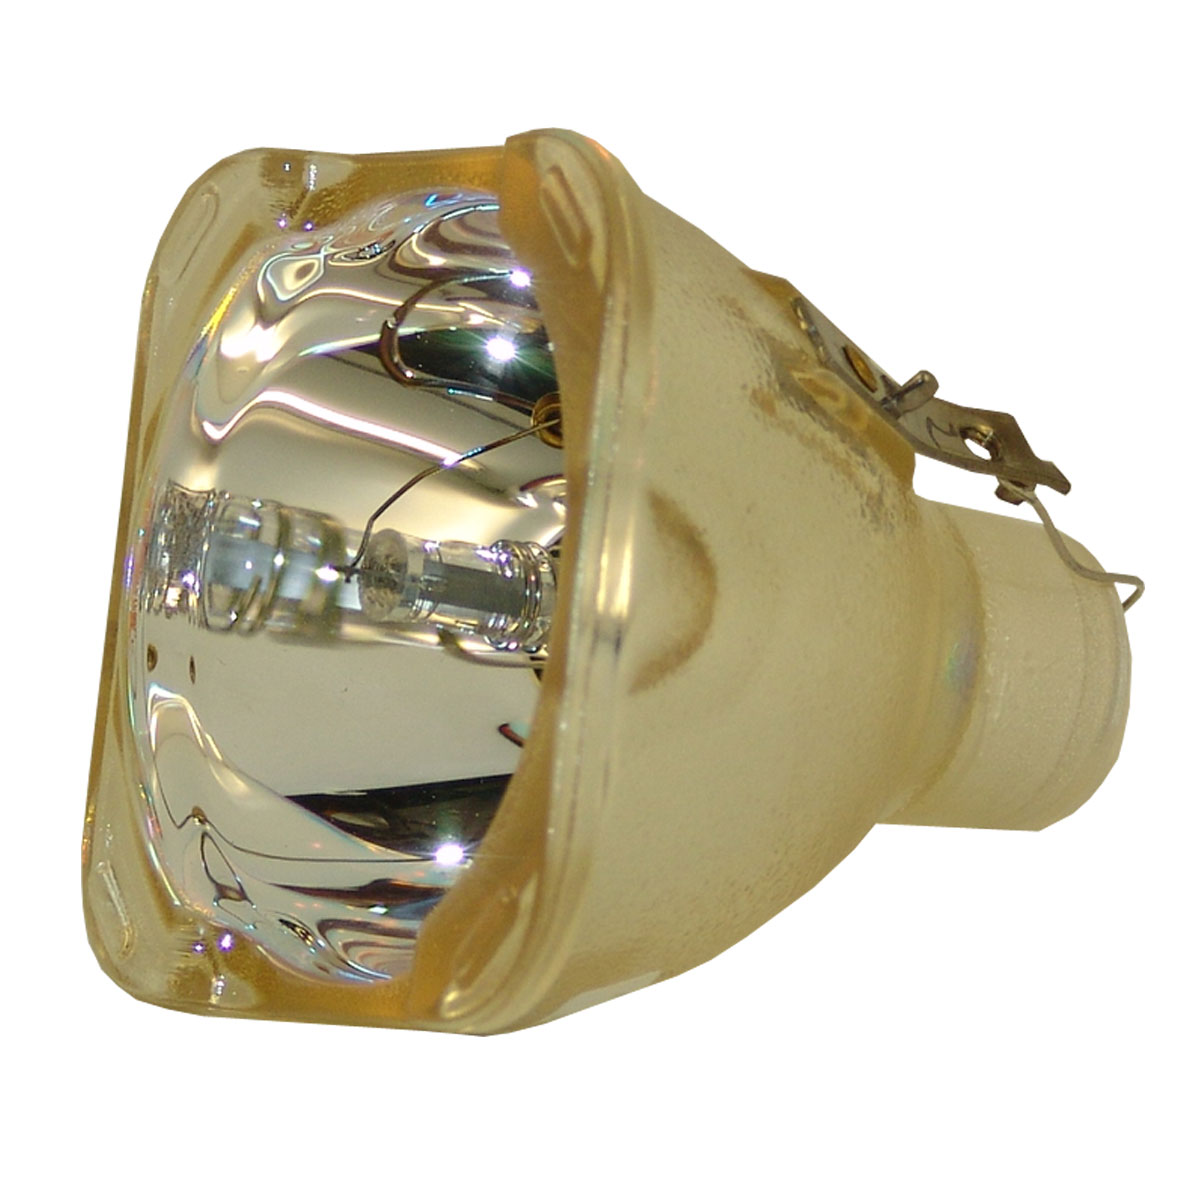 Philips E21.7 300W/245W 1.1 AC Bare Projector Lamp (9284 482 05390)  - 240 Day Warranty